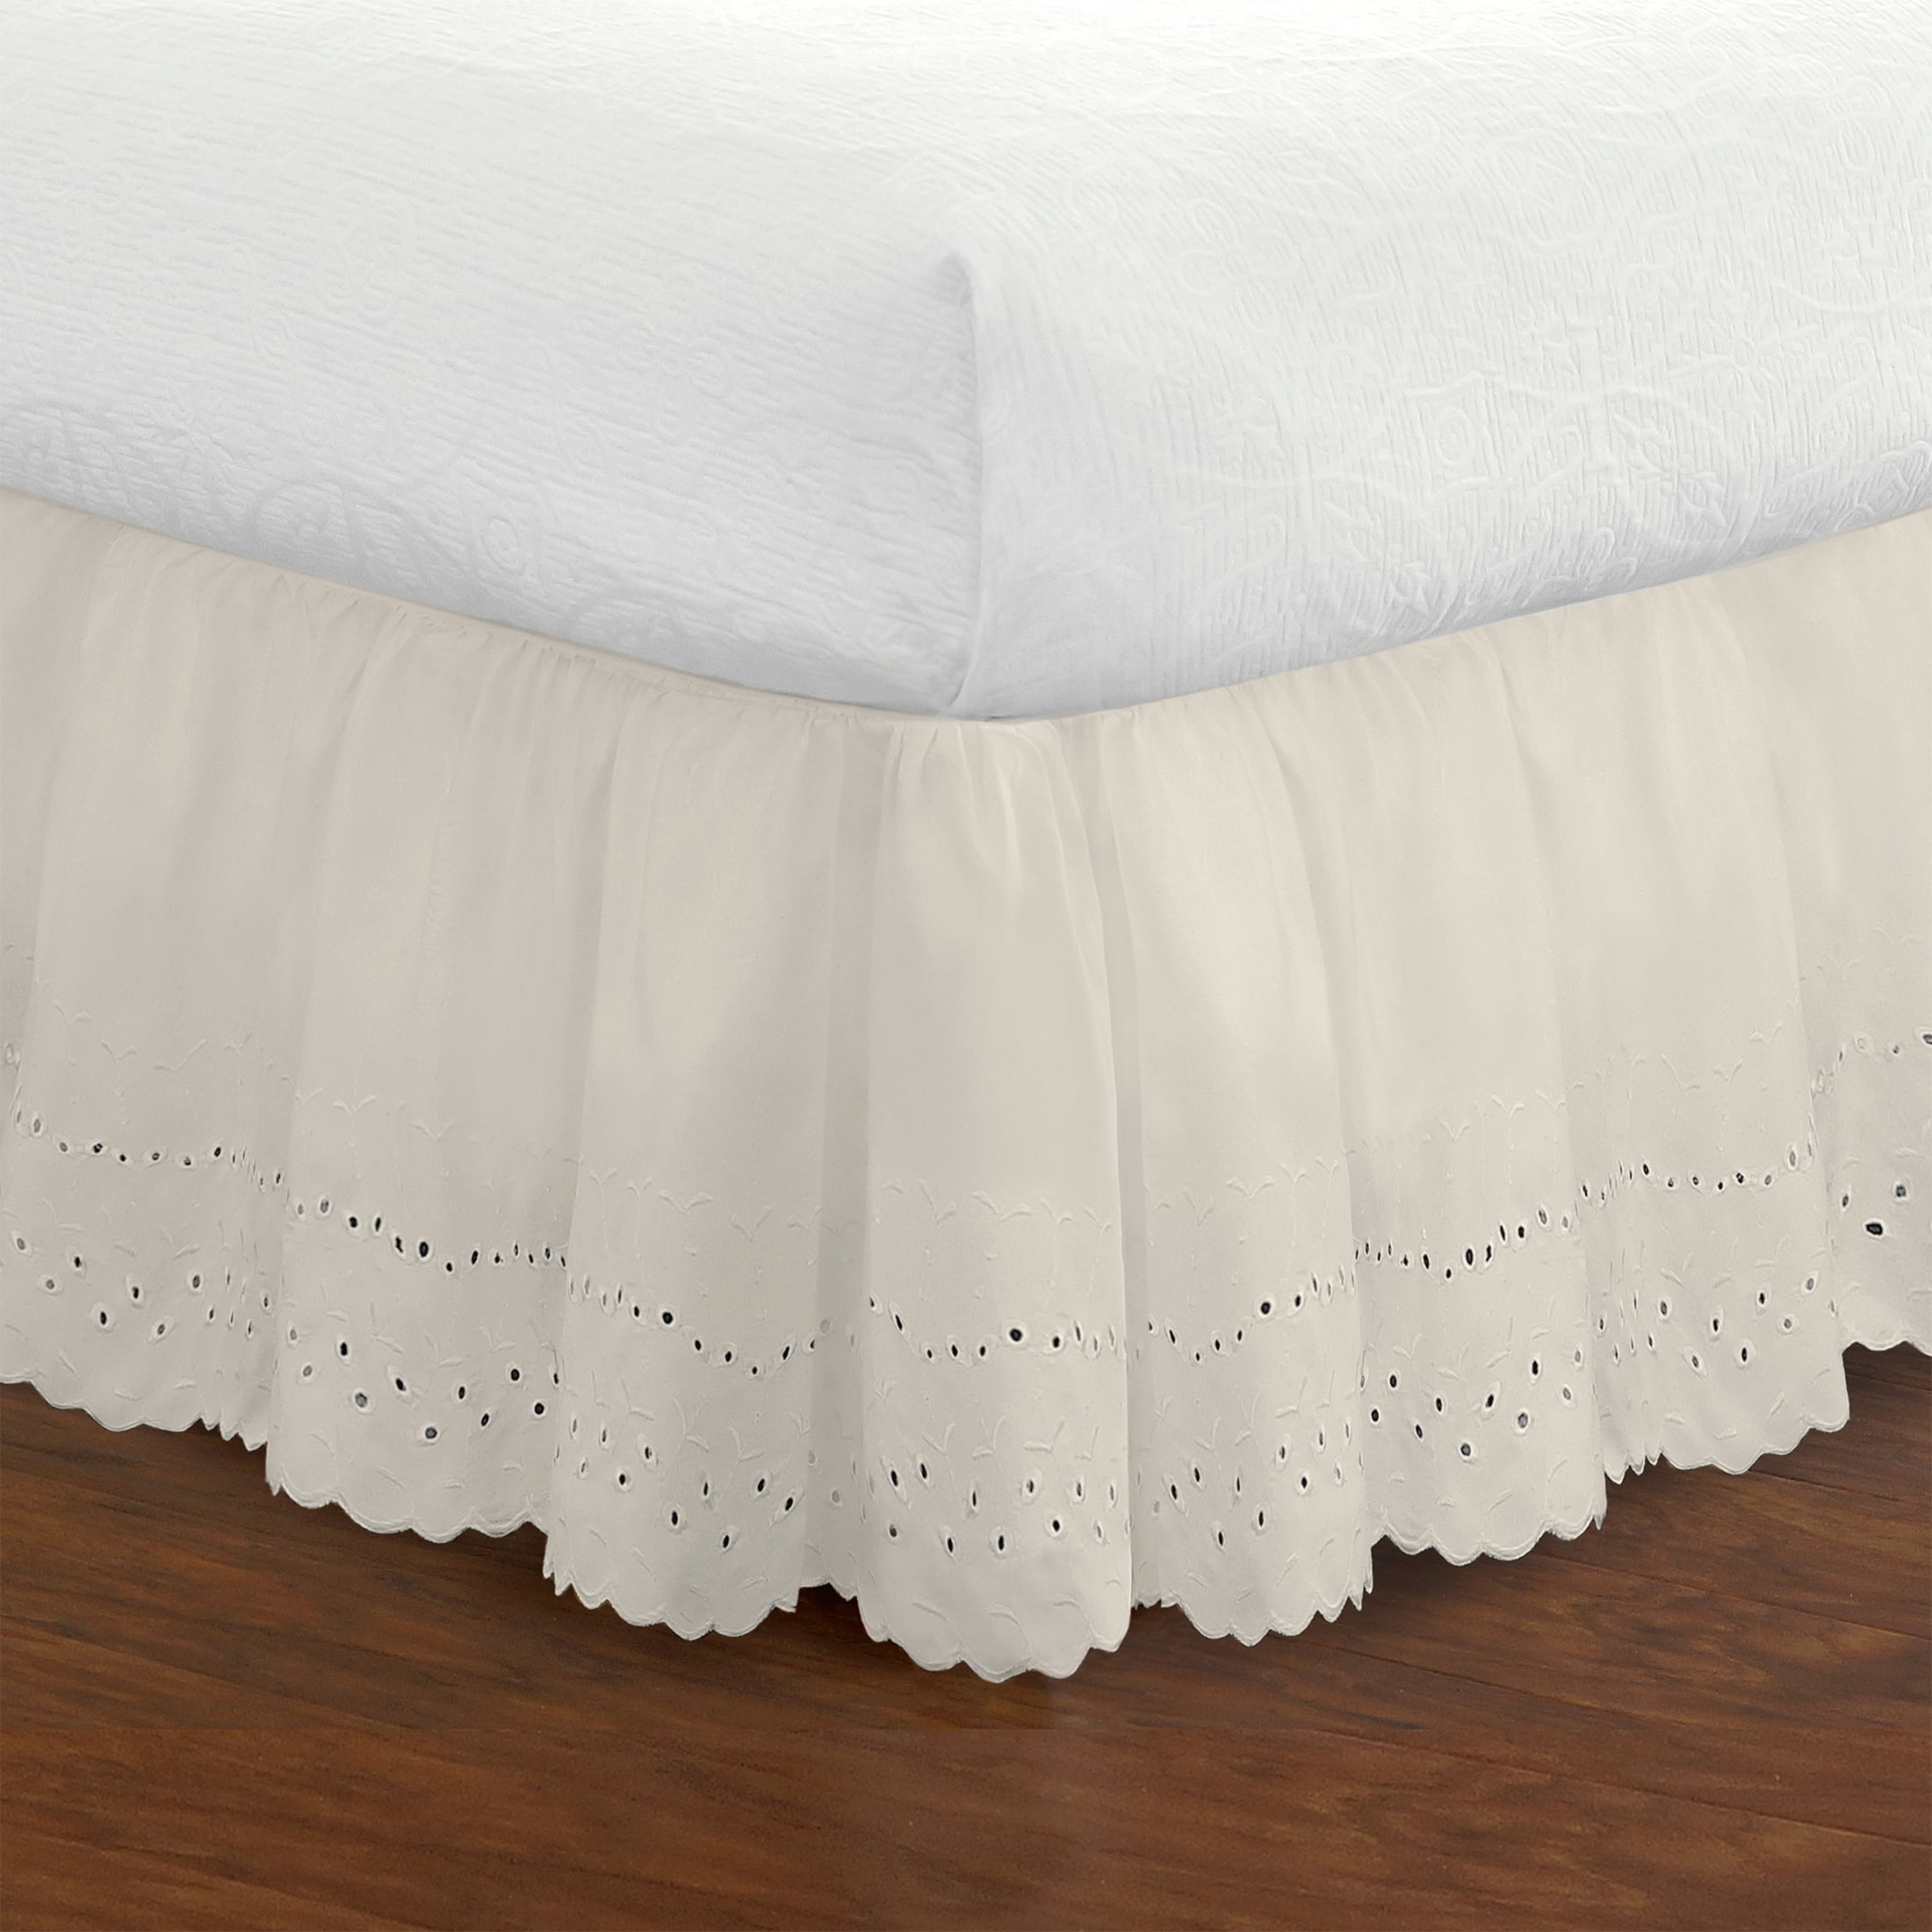 Bedskirt Ruffle CREAM IVORY OFF-WHITE Tulle Bed Skirt Any Size detachable option 